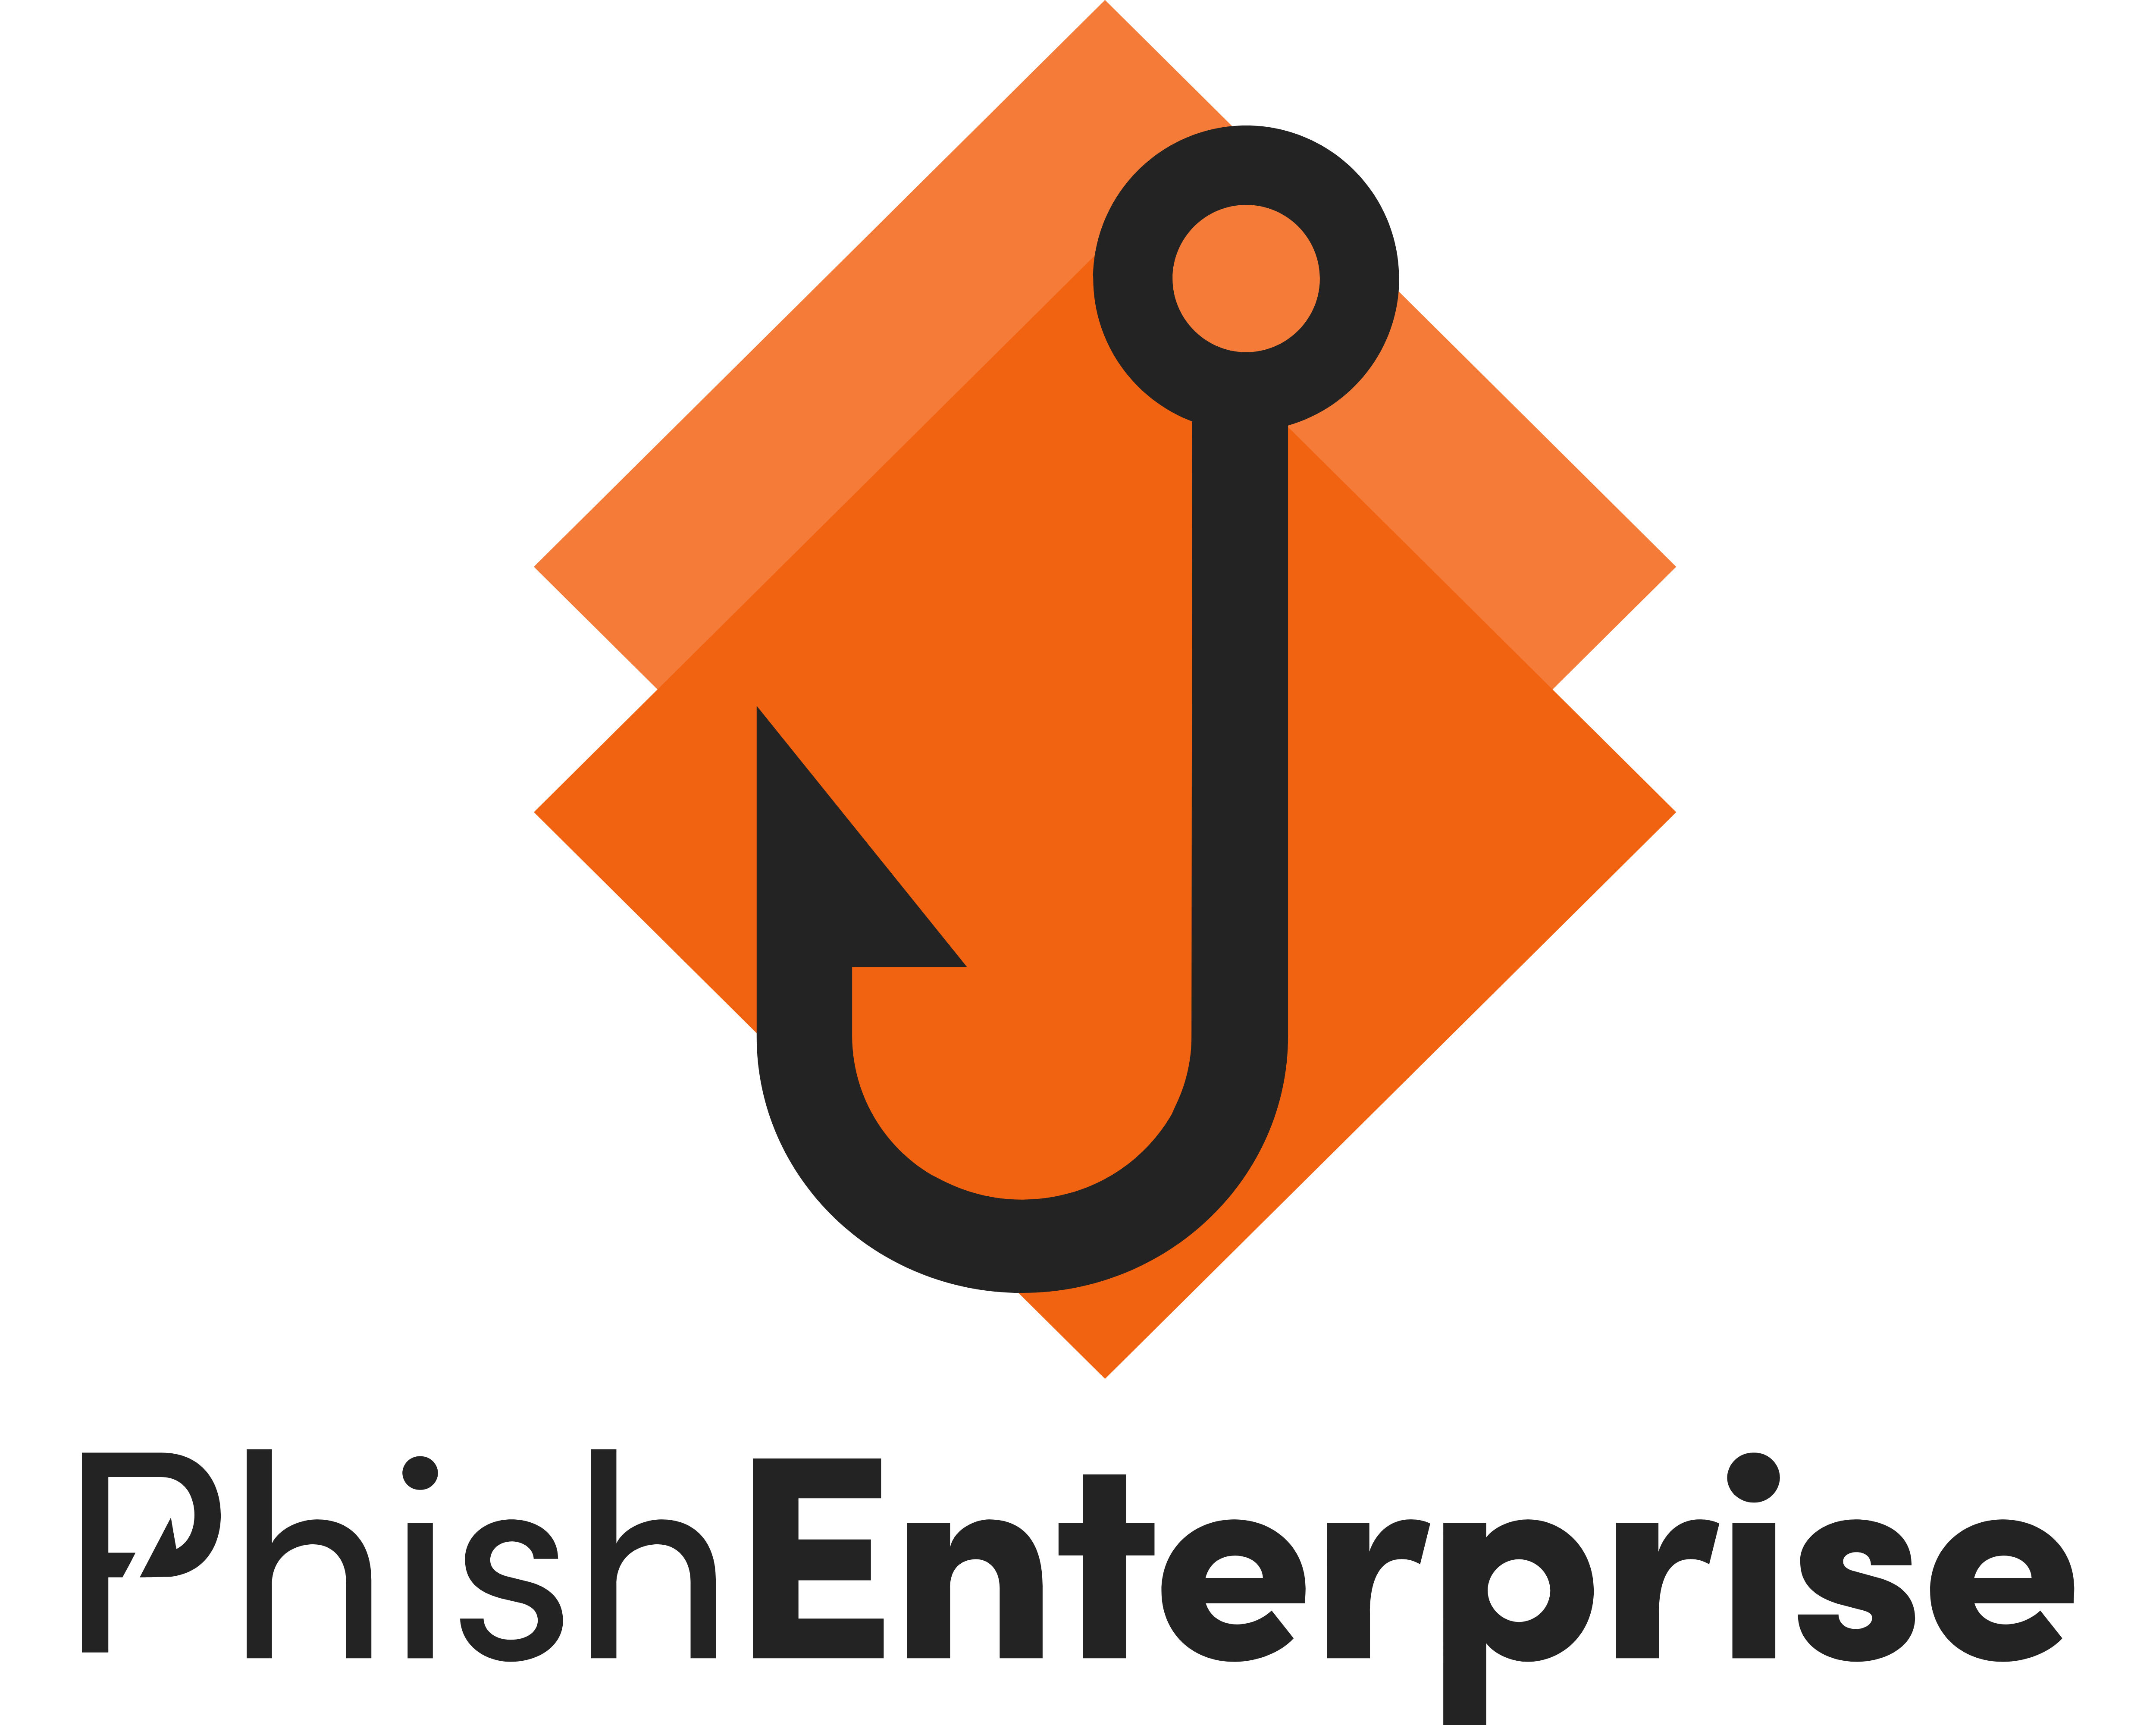 Phish Enterprise